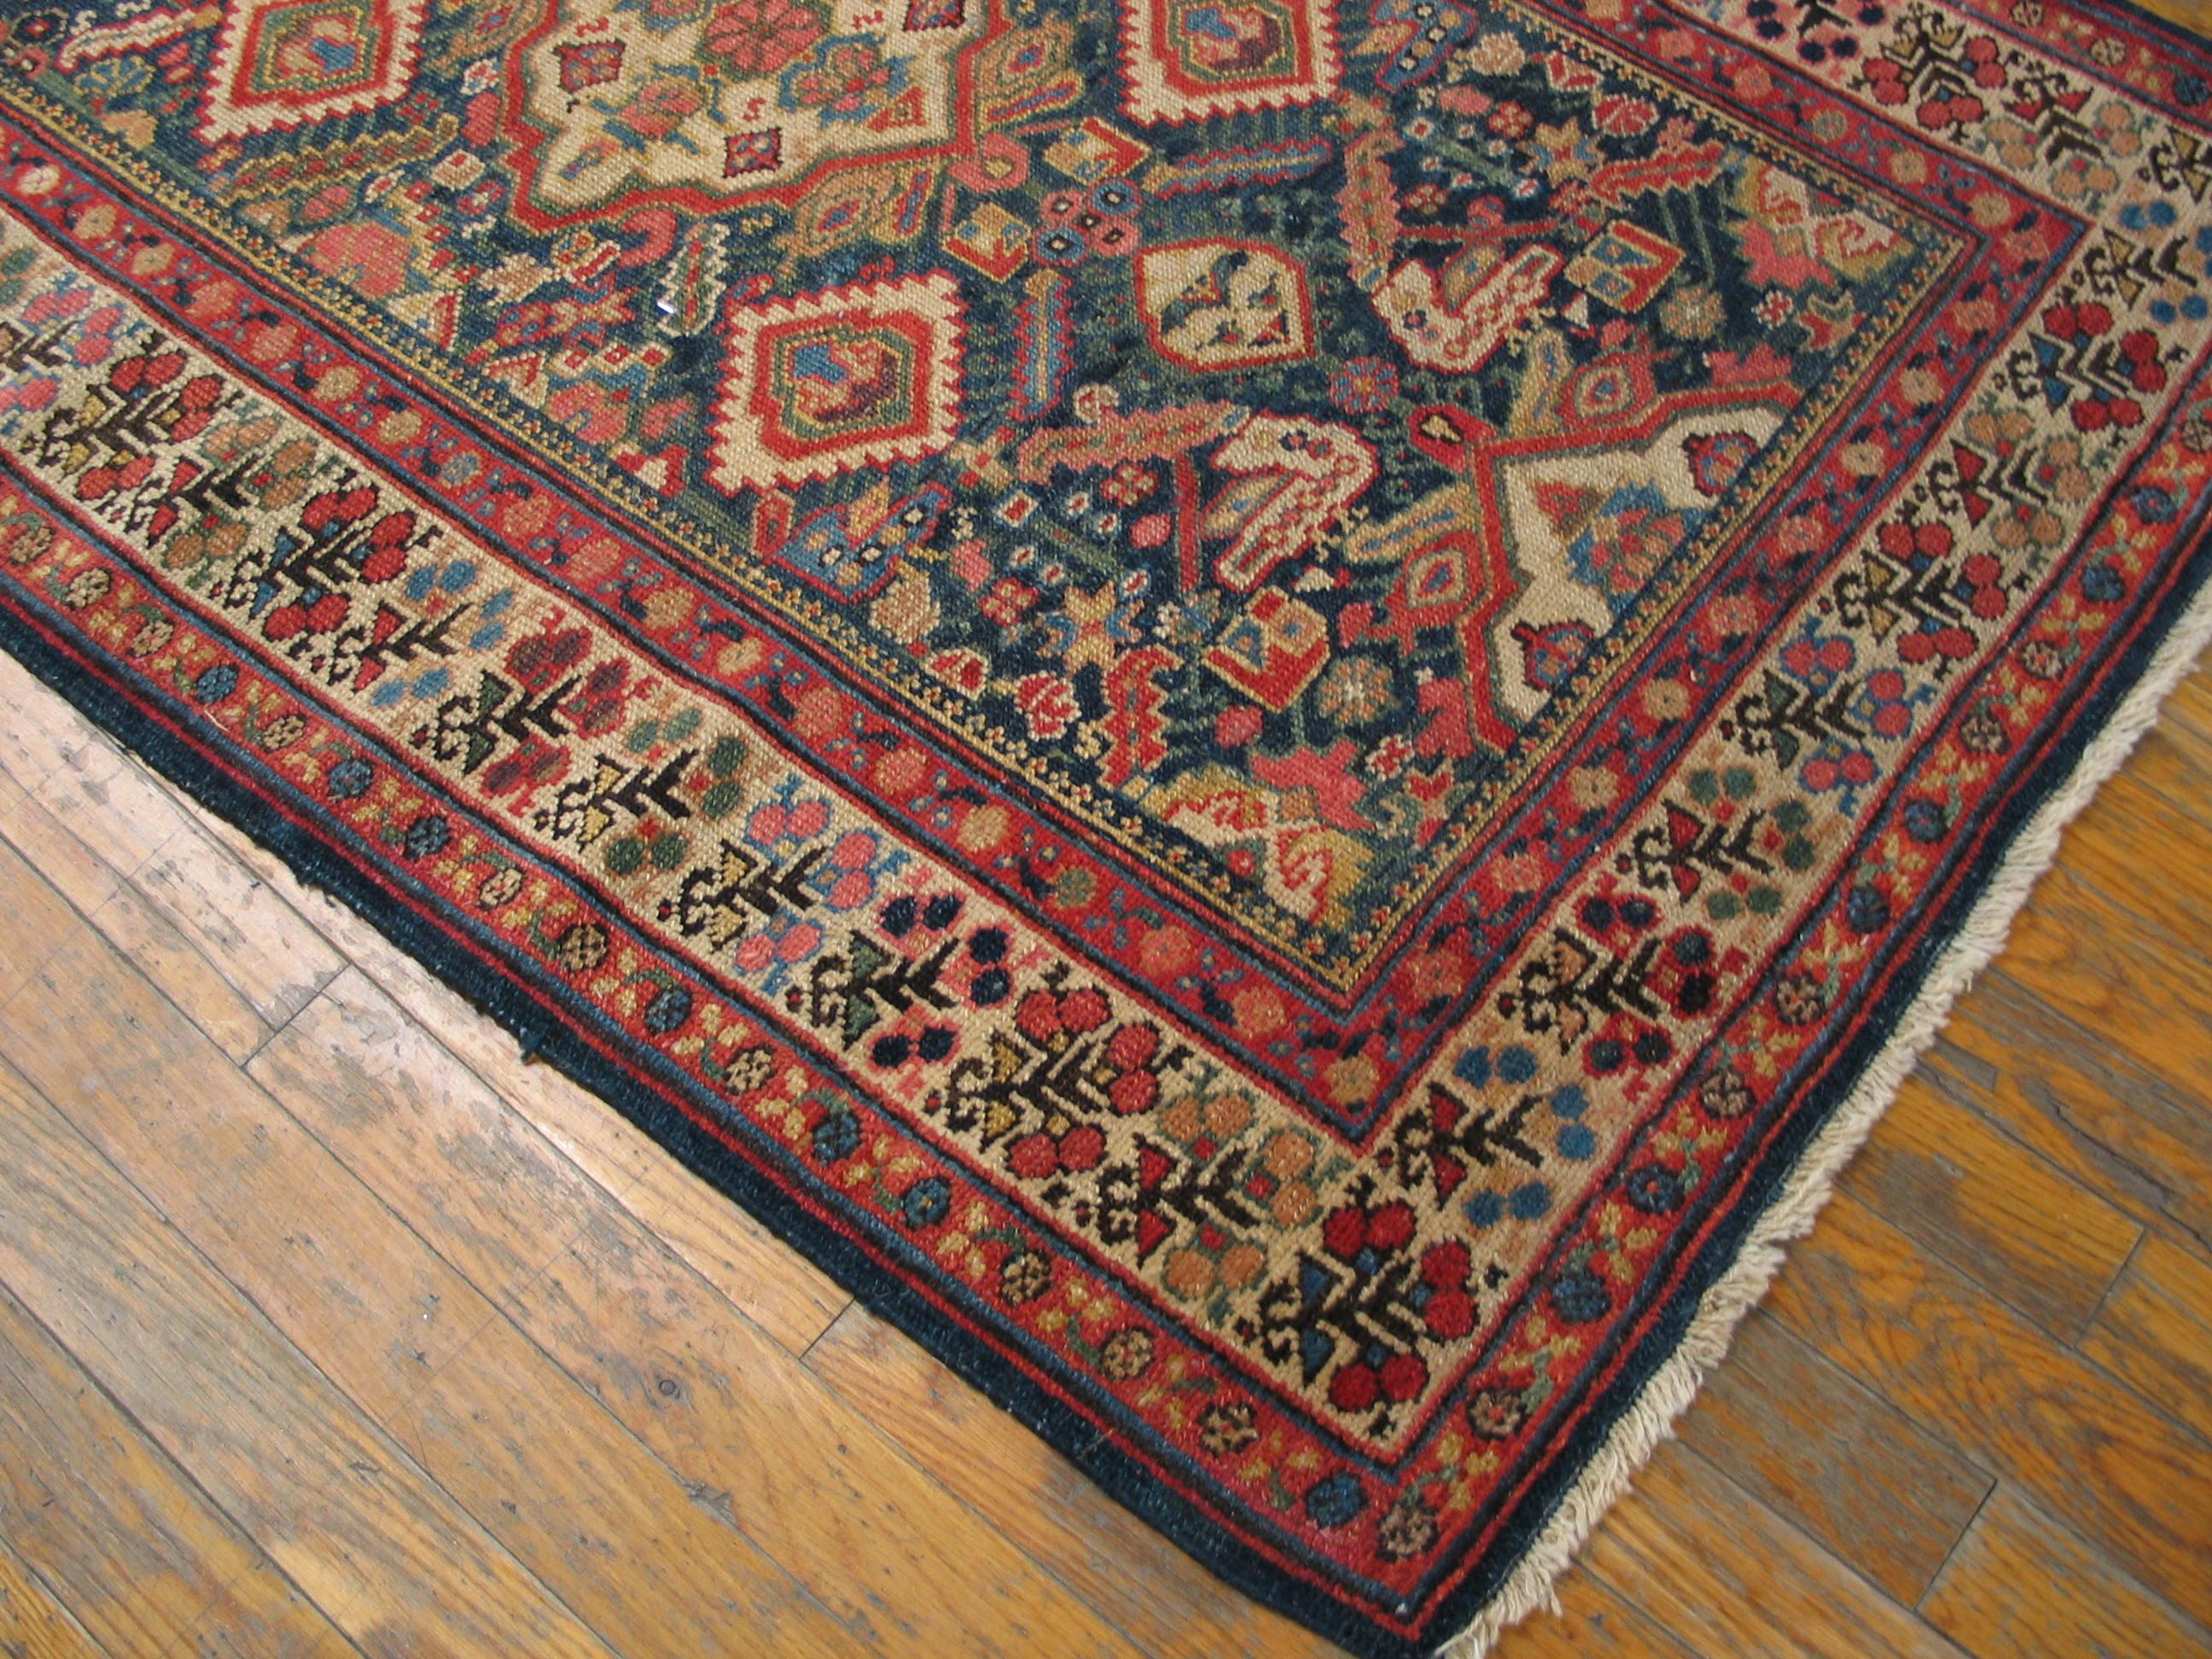 Antique Persian Serab rug. Measures: 3'2